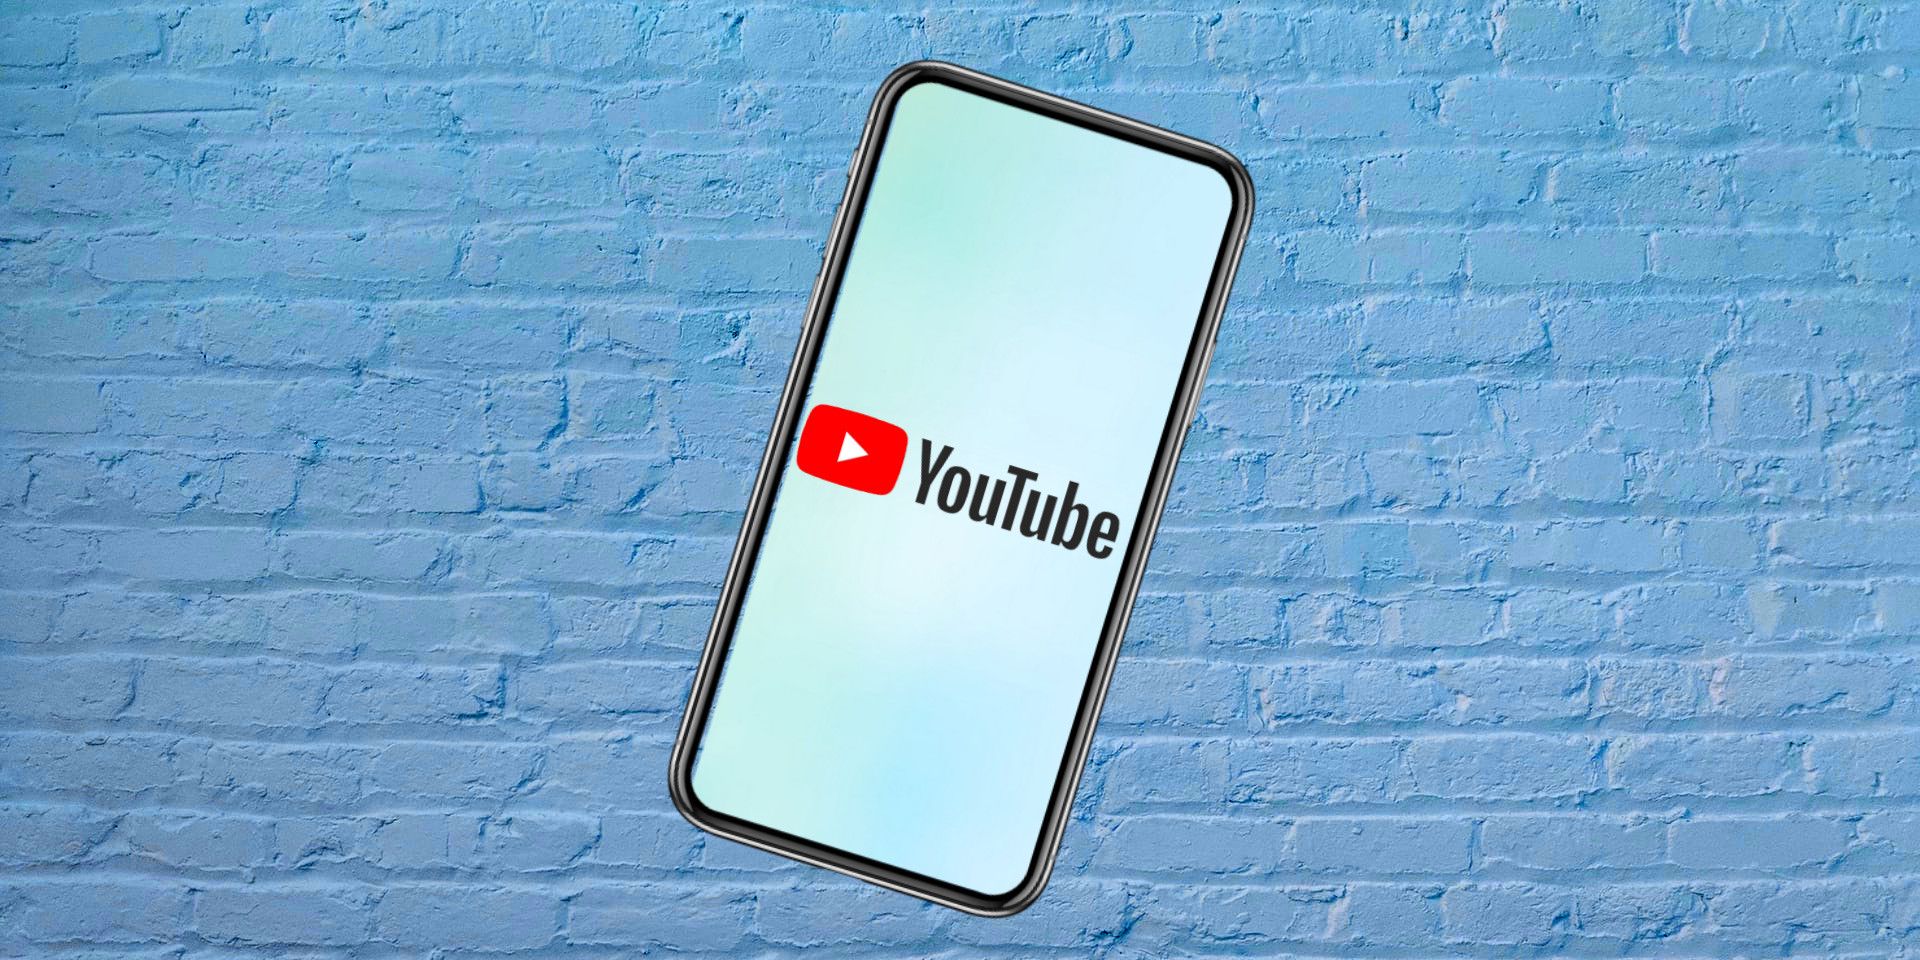 YouTube logo on smartphone with a custom brick background